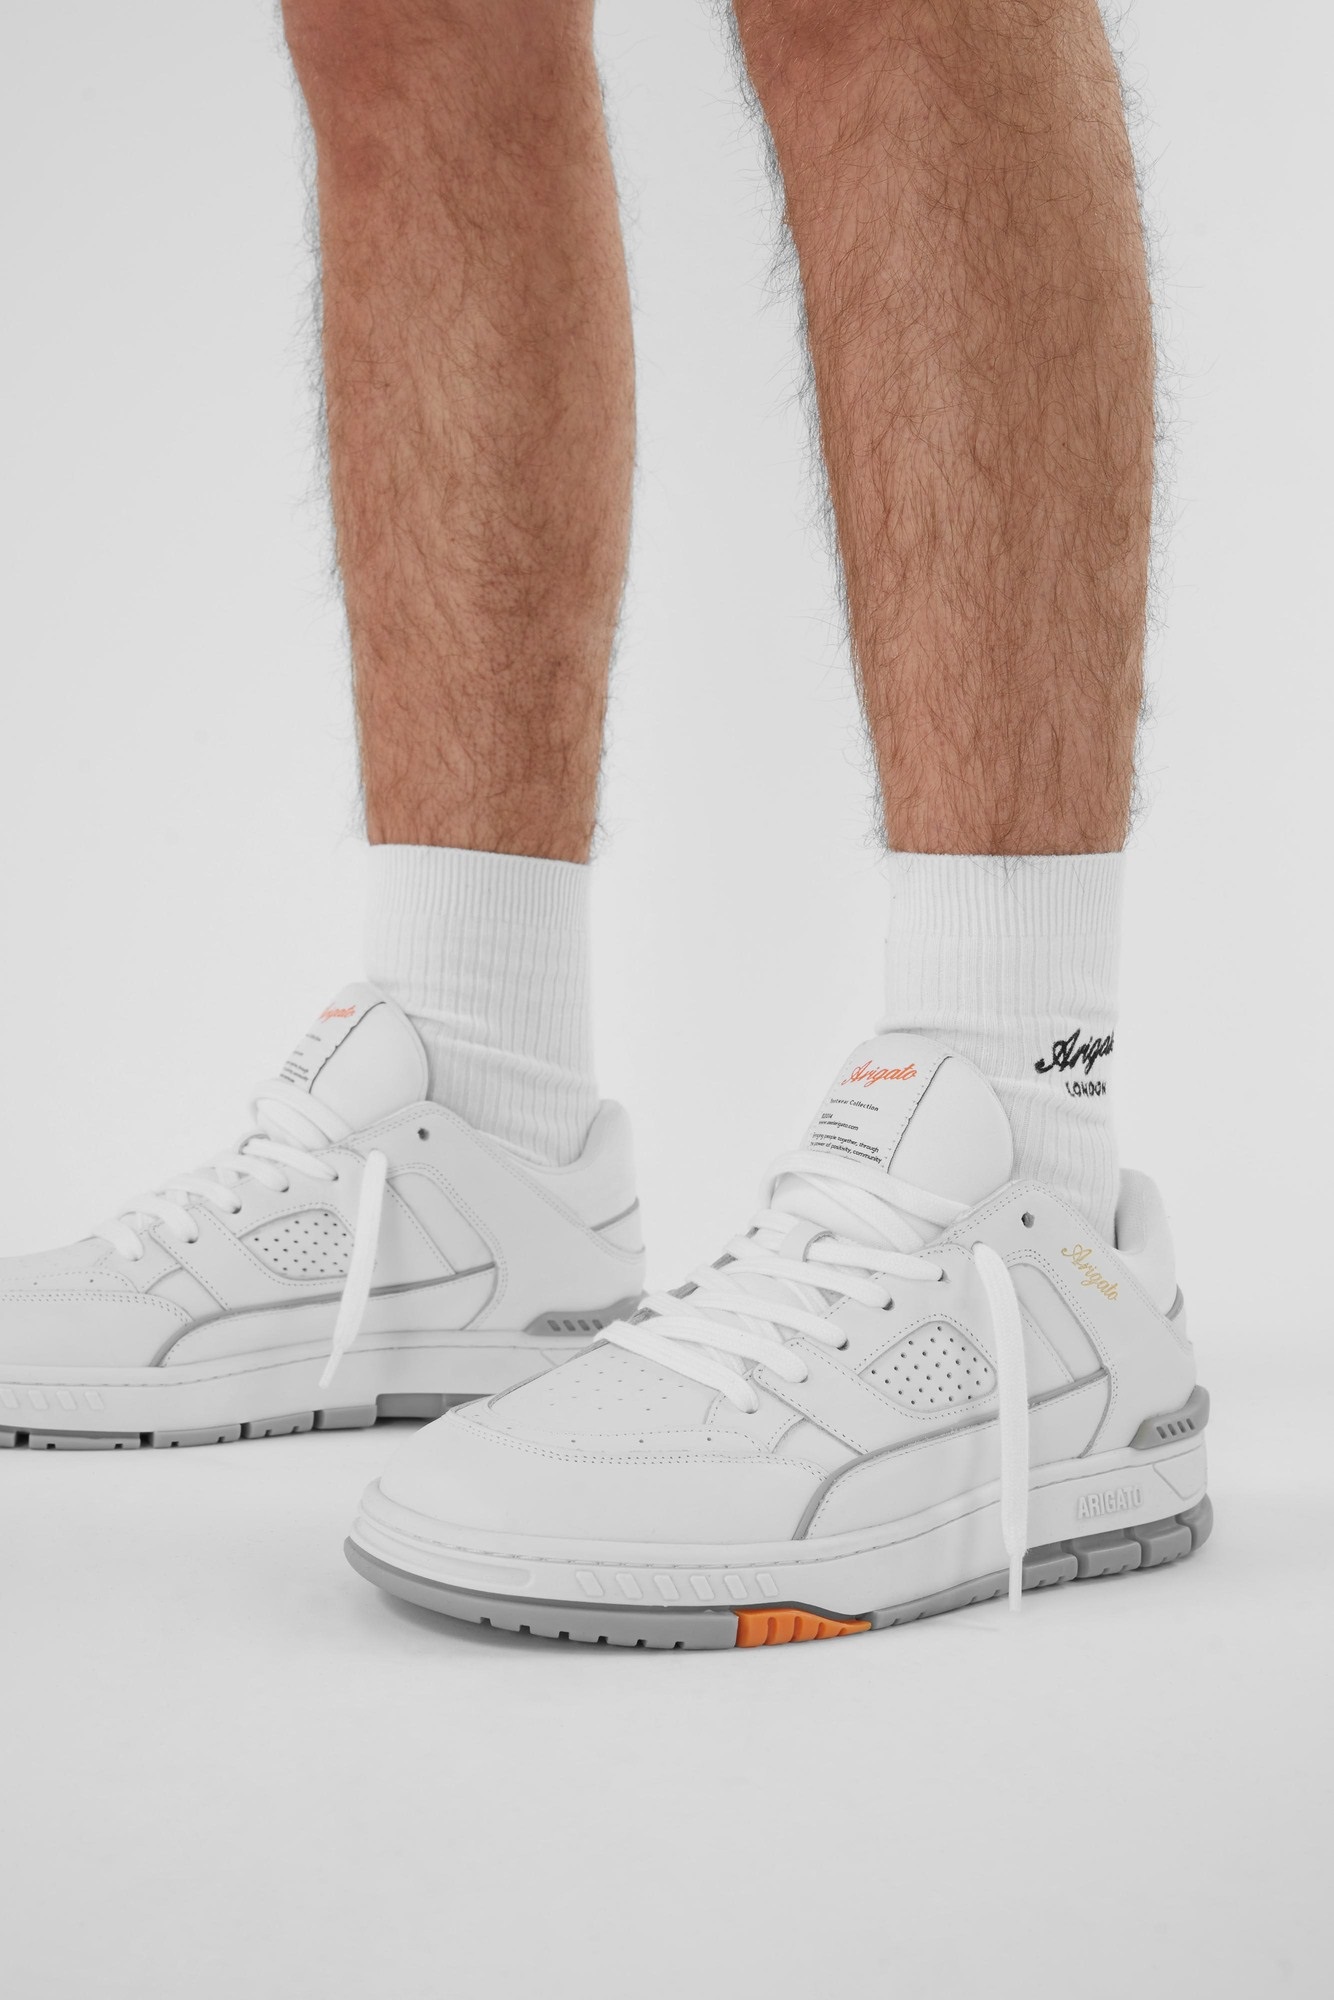 AXEL ARIGATO Area Sneaker in White/Grey 40